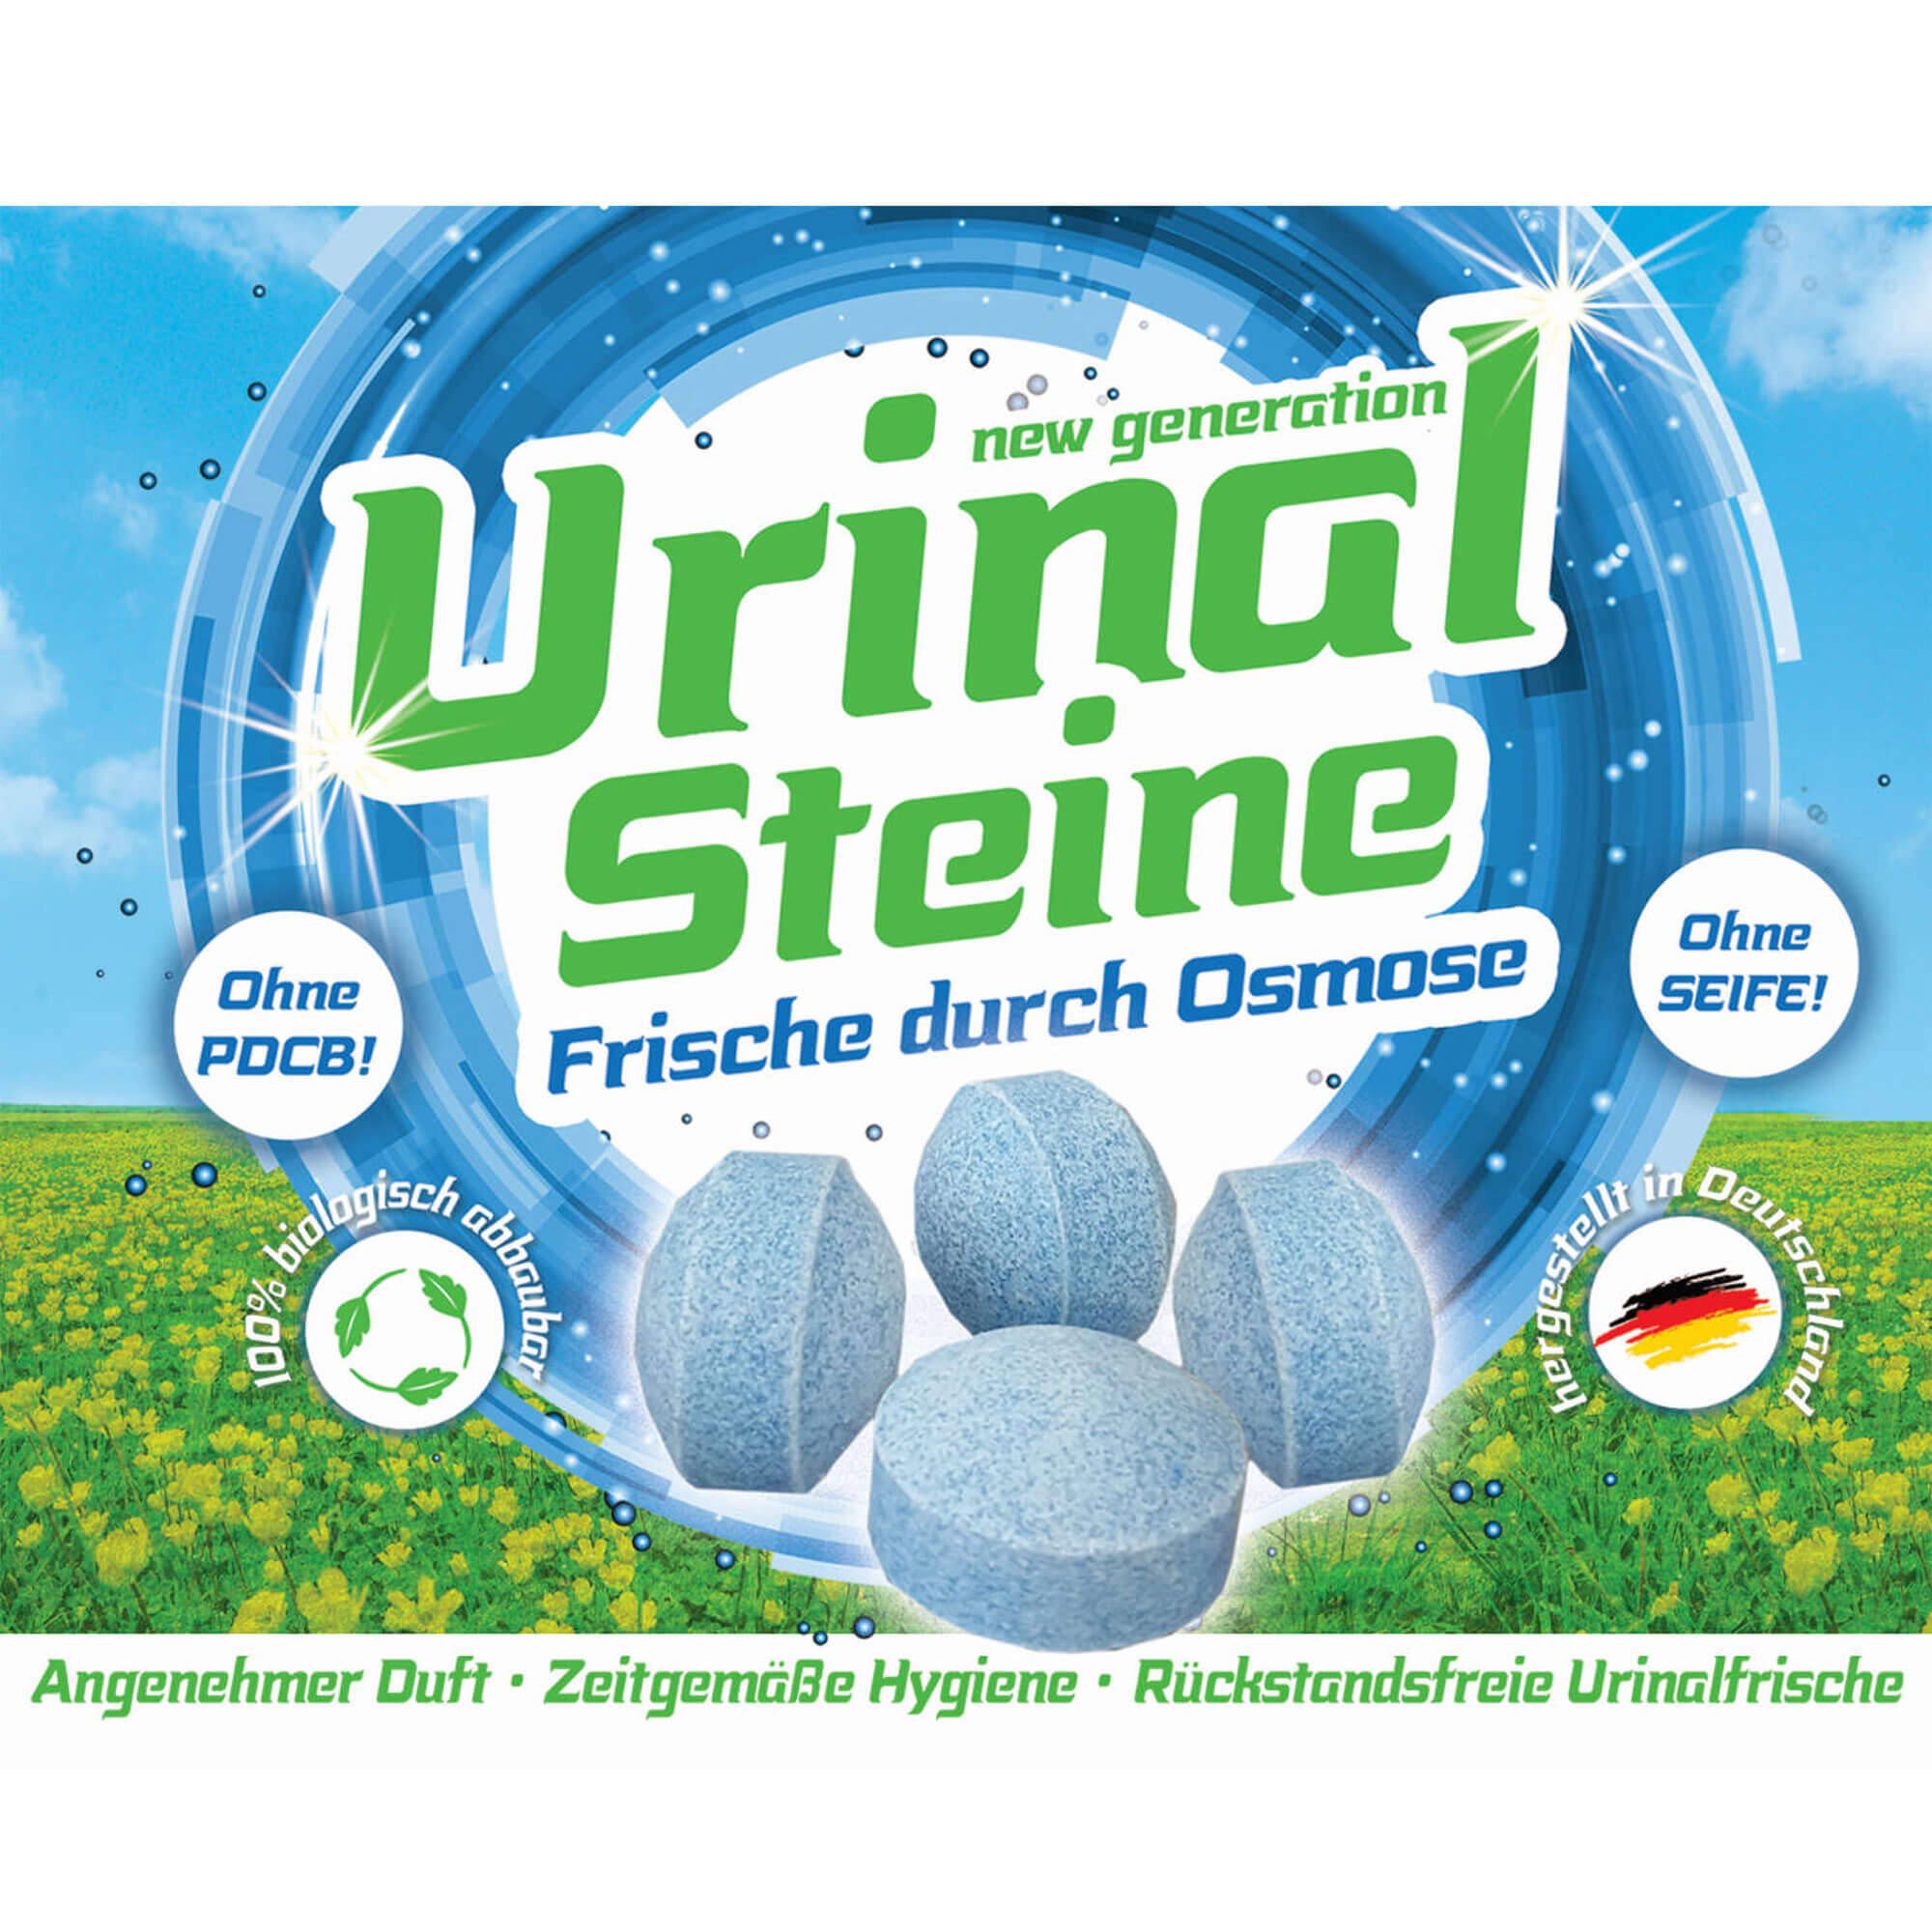 Deodorizer blocks for urinals - BIO osmosis (1 kg)